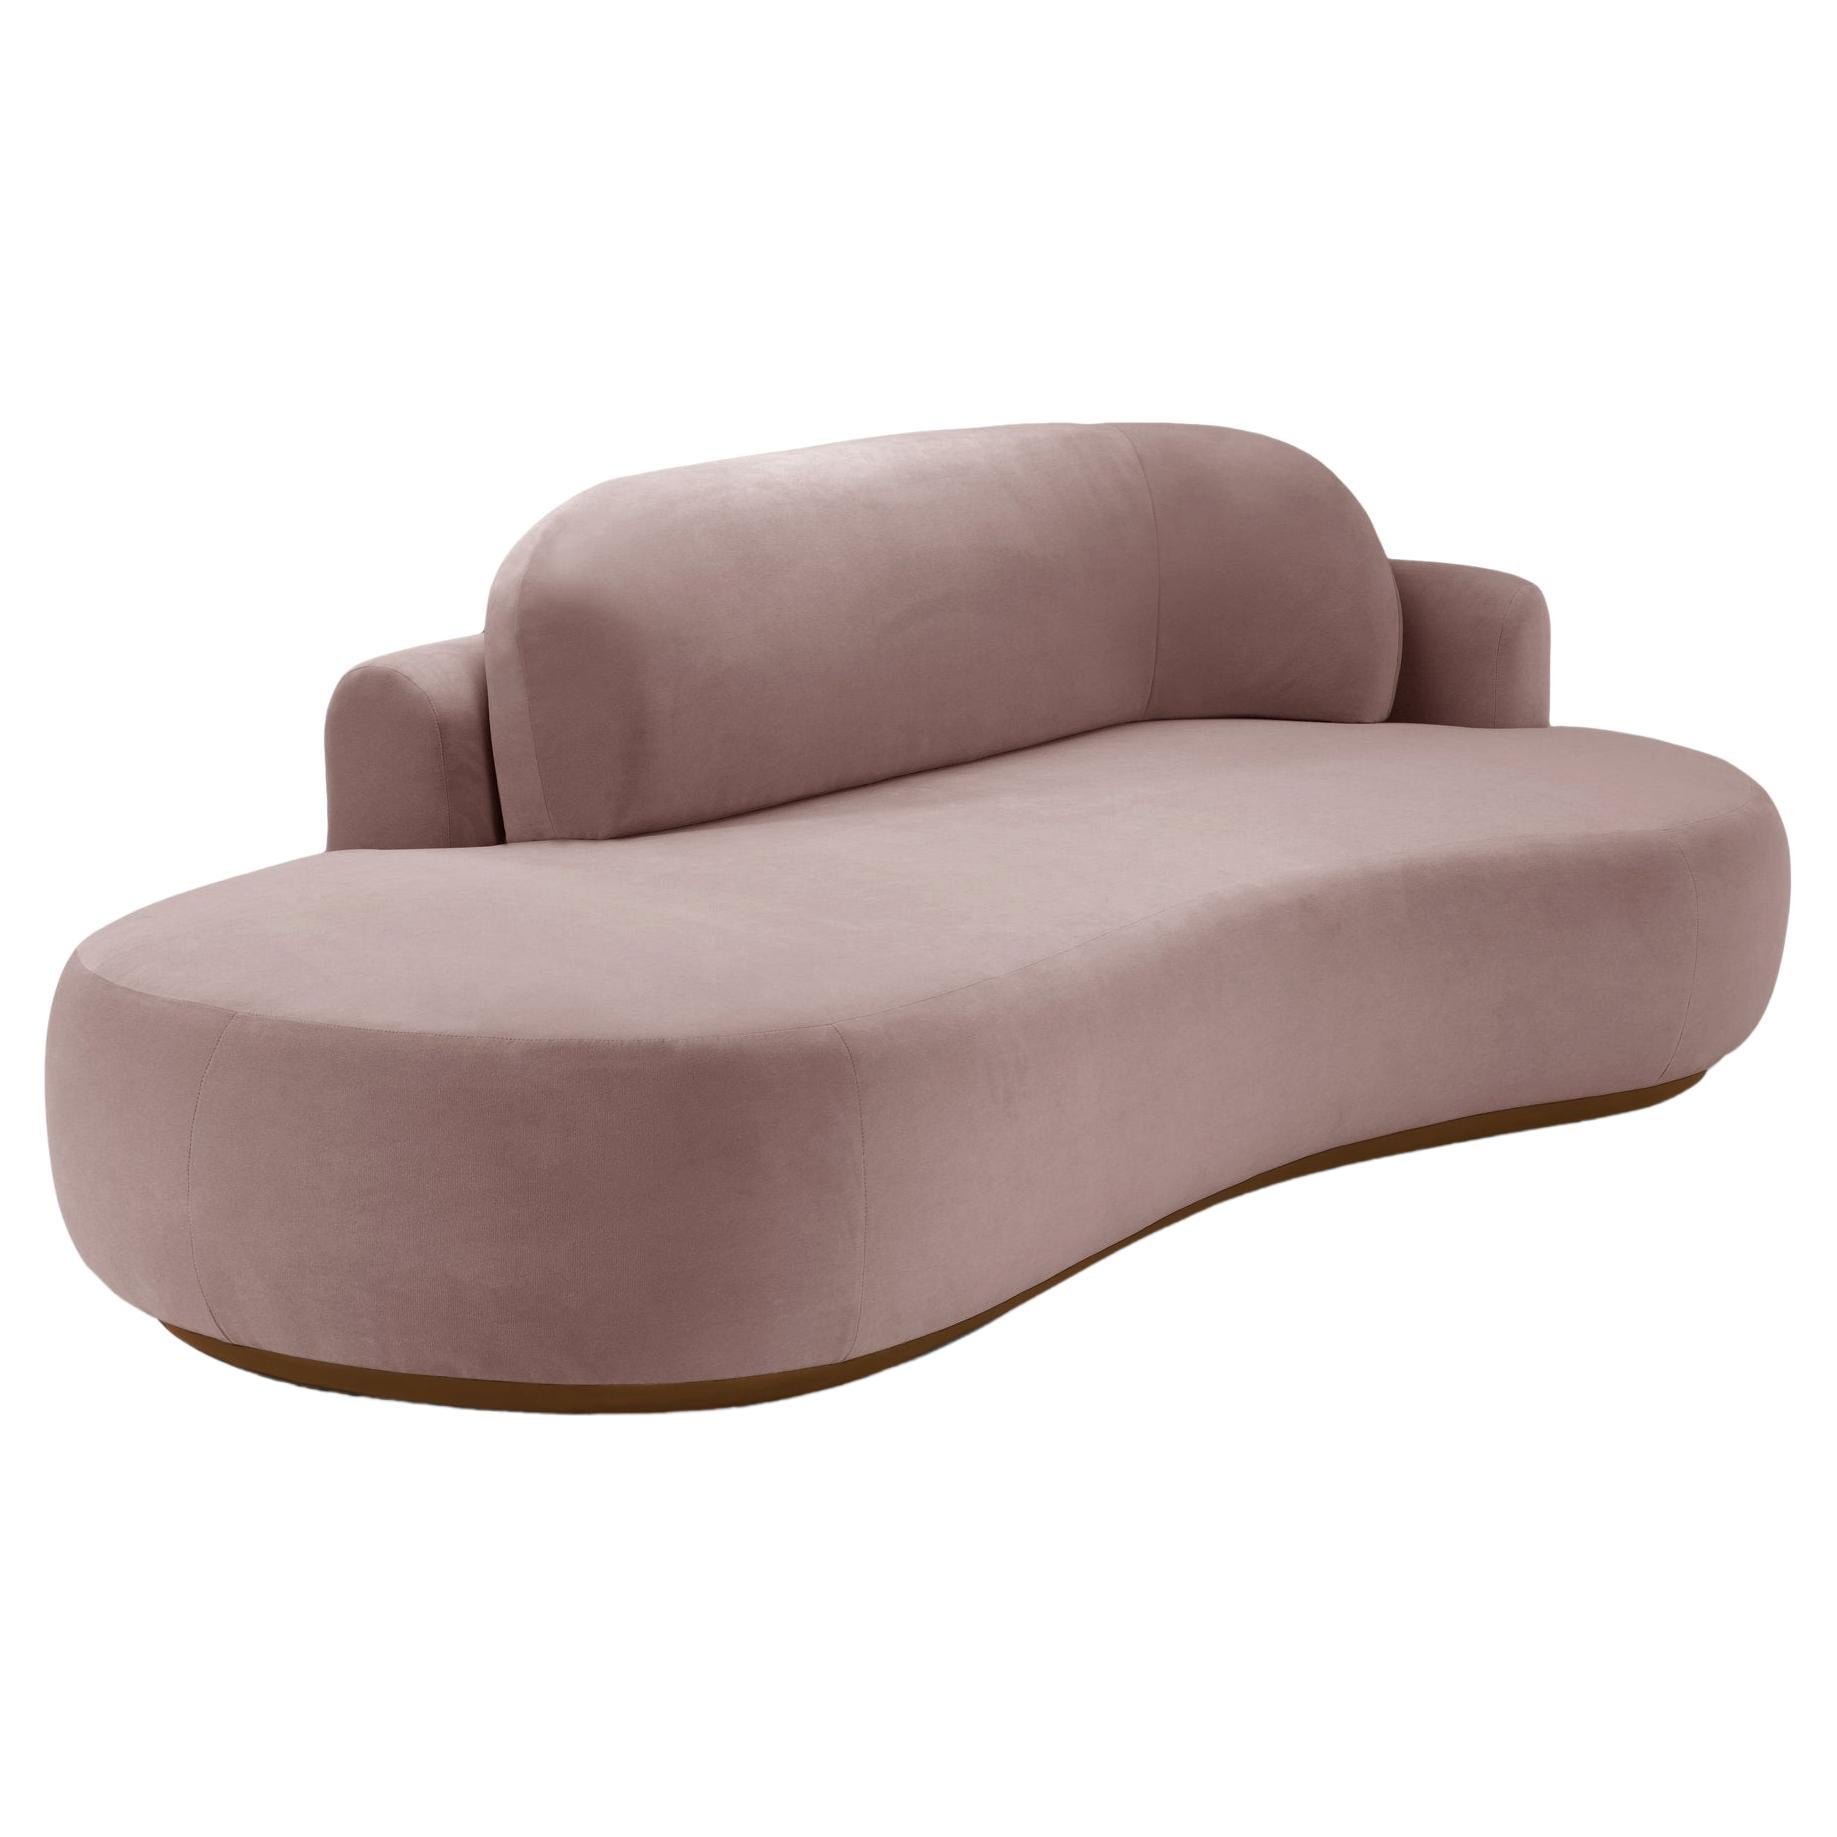 Naked Curved Sofa Single with Beech Ash-056-1 and Barcelona Lotus